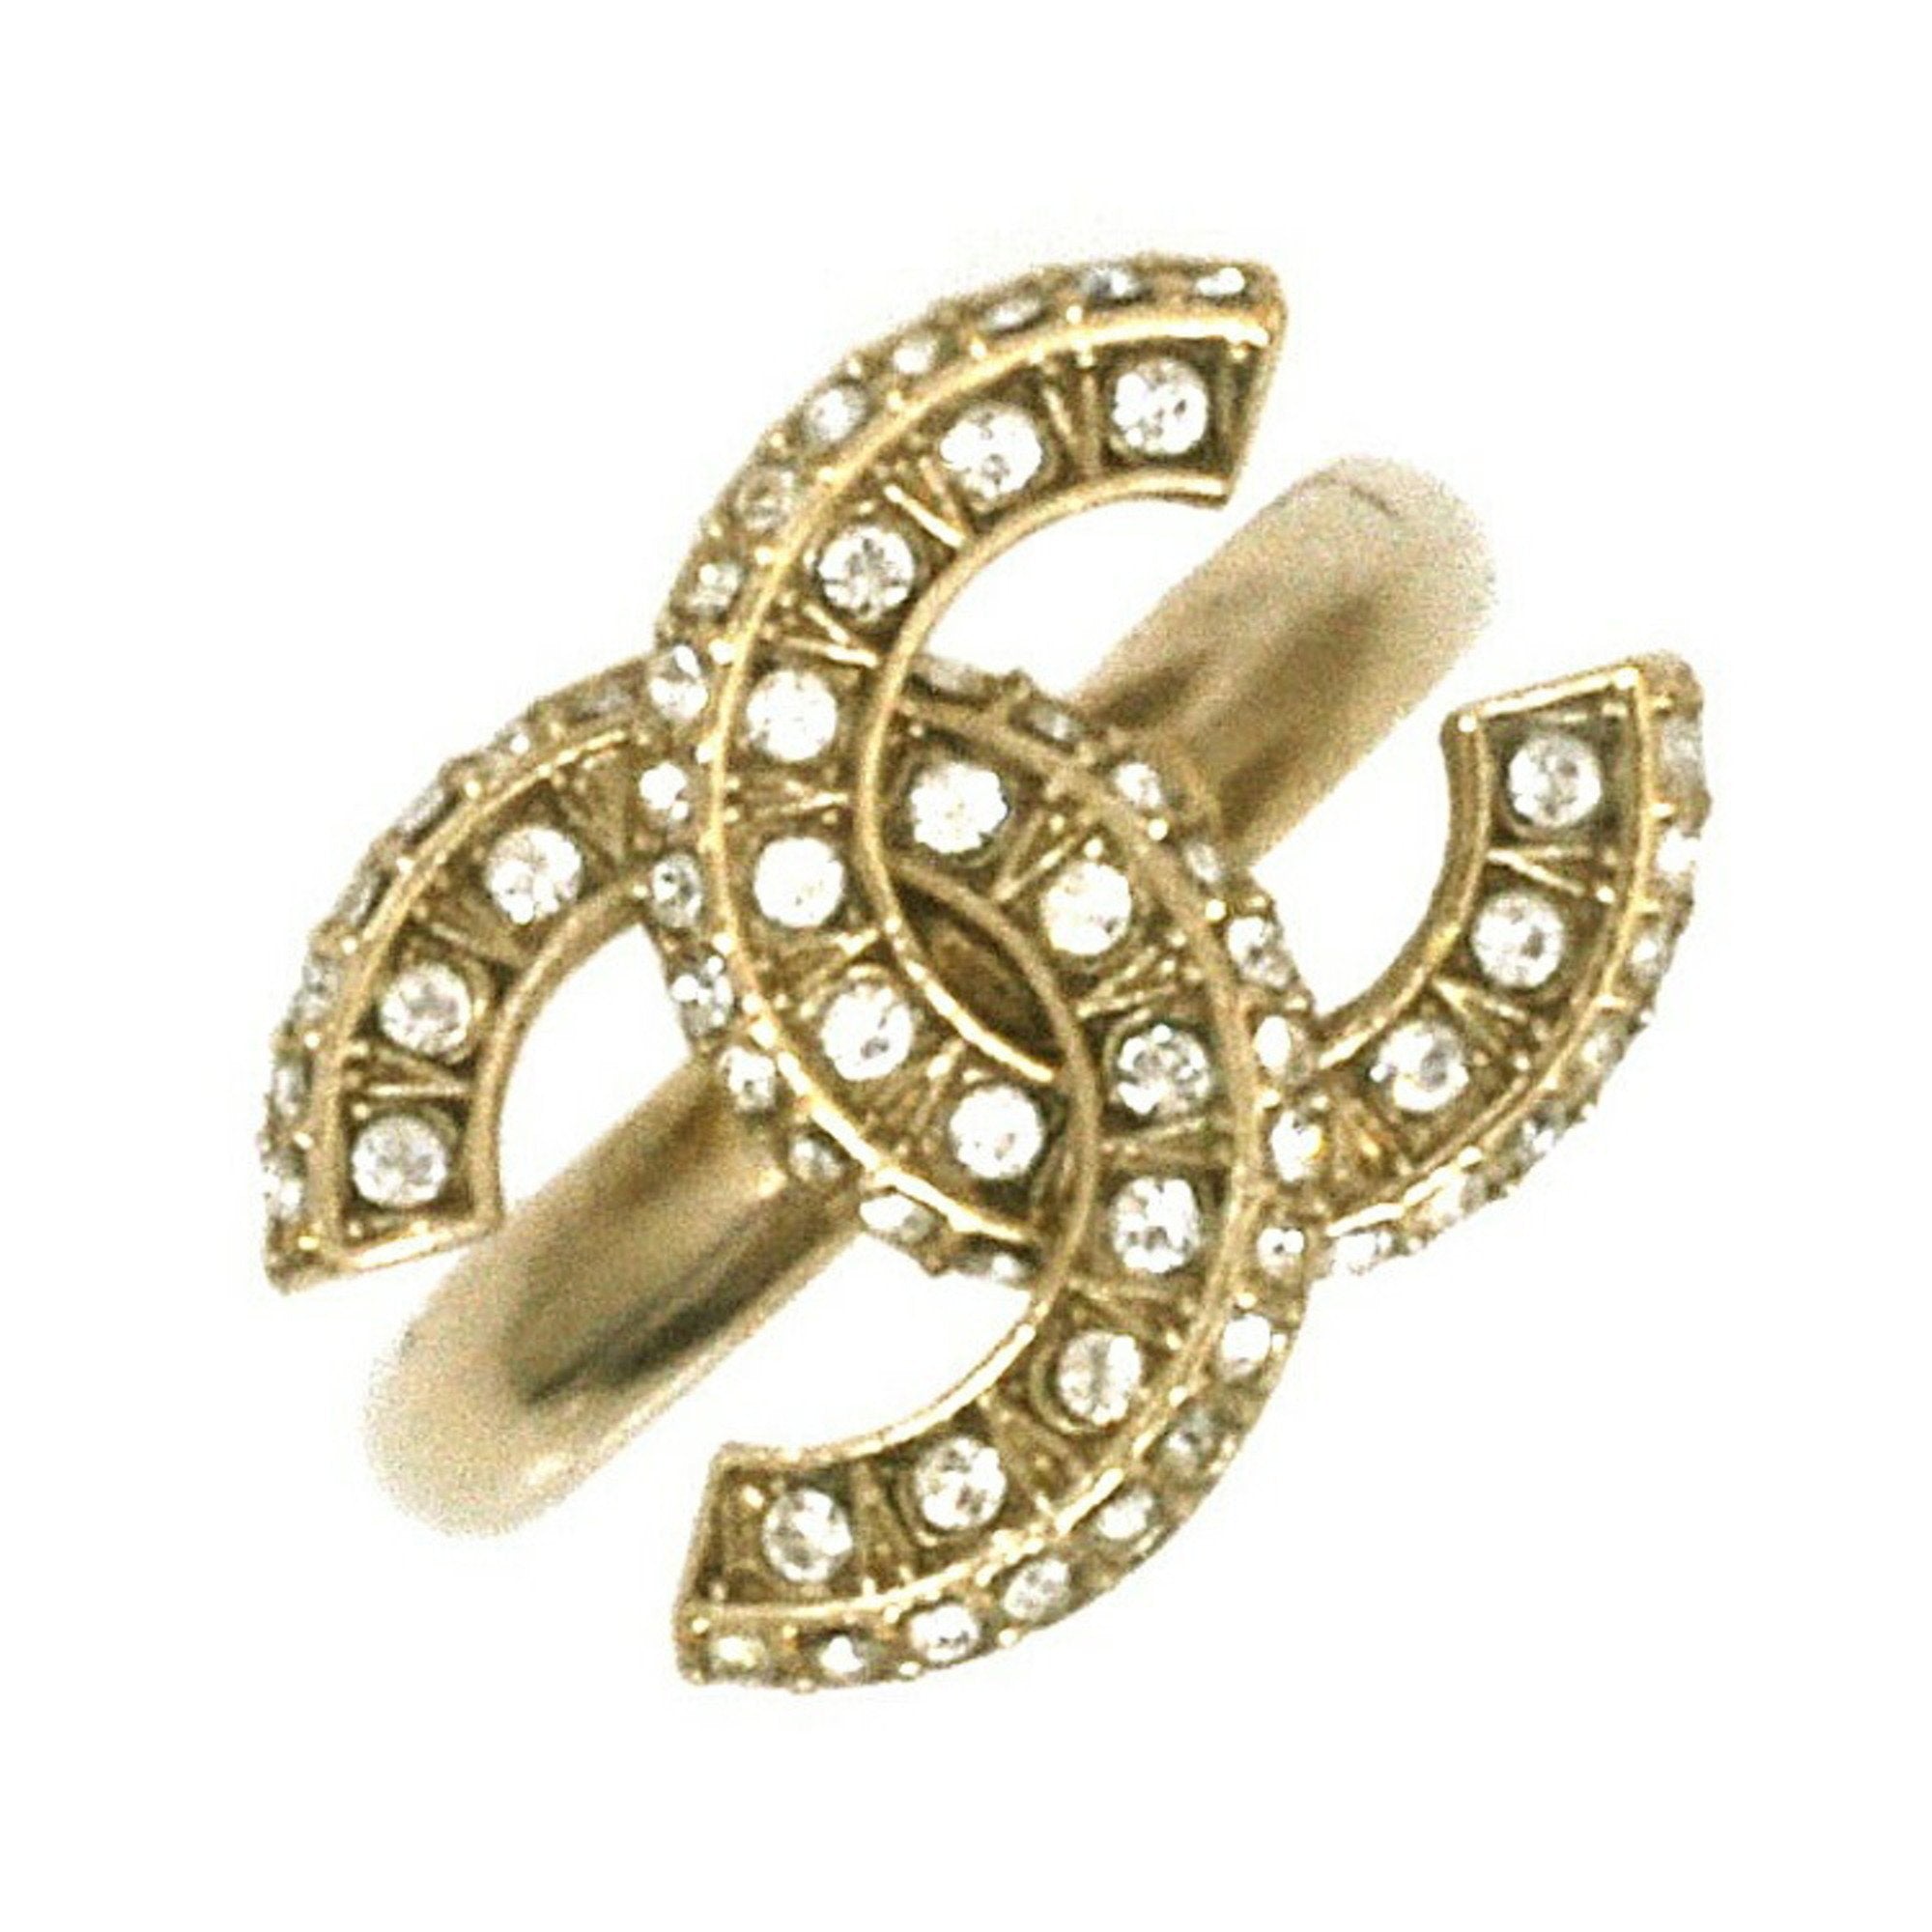 Chanel Ring Gold Clear Stone Cocomark No. 13 GP A16 V CHANEL Rhineston